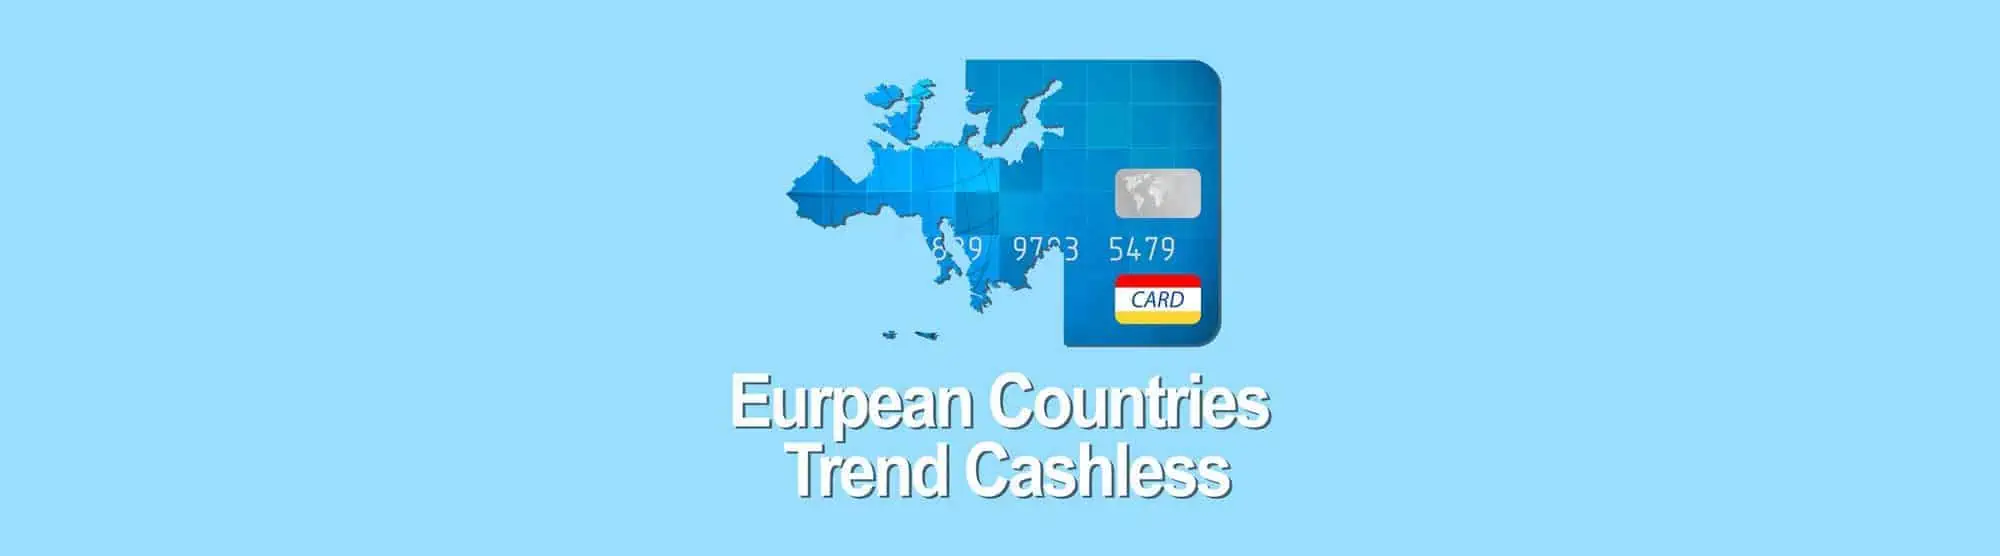 European-Countries-Trend-Cashless